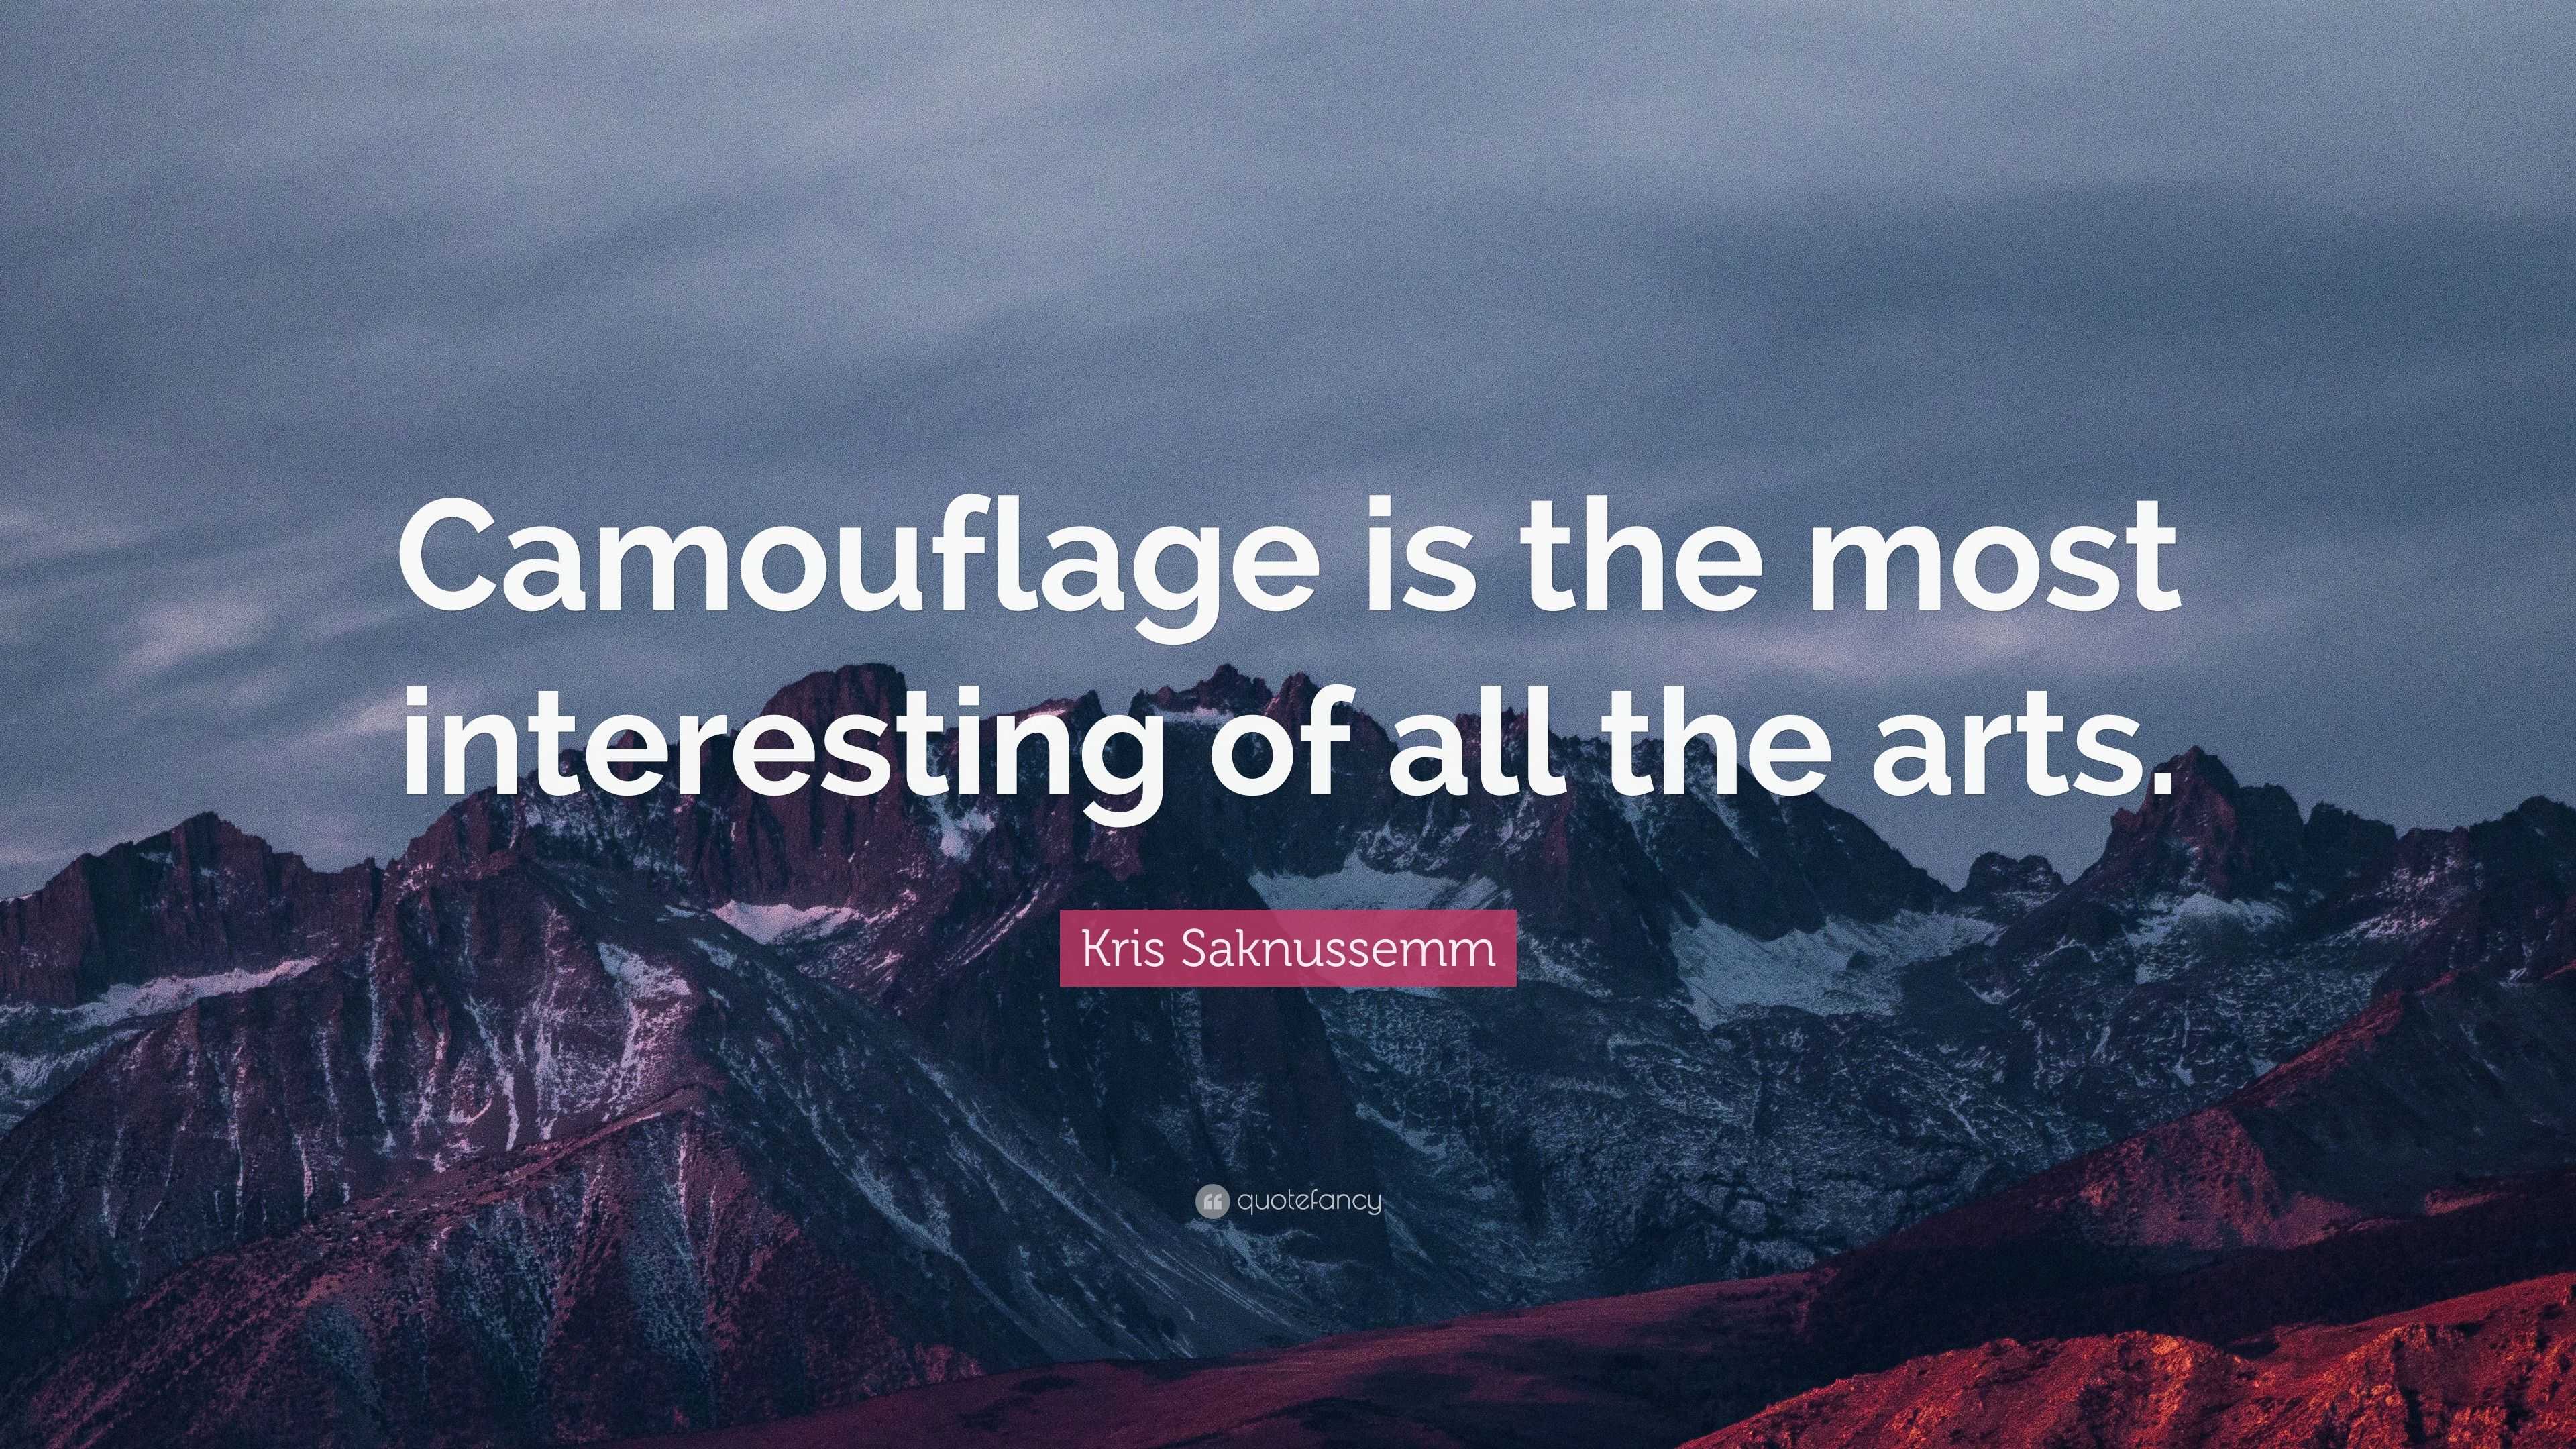 Kris Saknussemm Quote: “Camouflage is